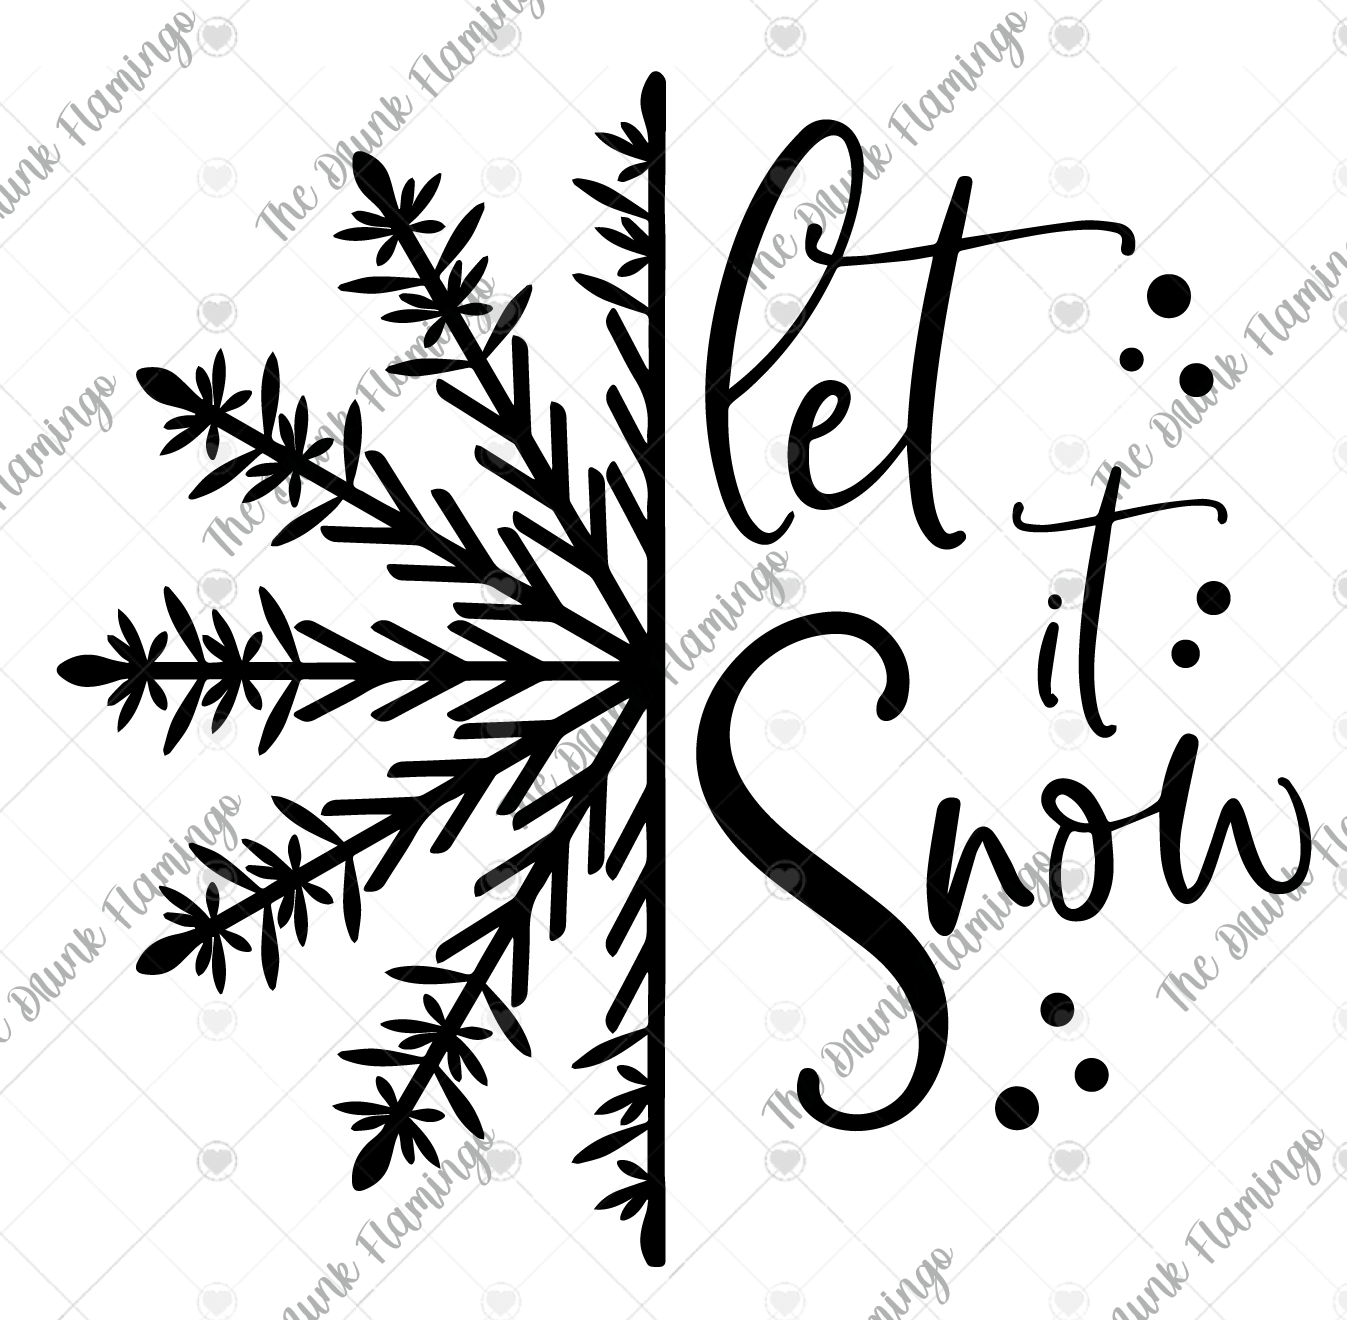 Let it Snow snowflake DIGITAL DOWNLOAD